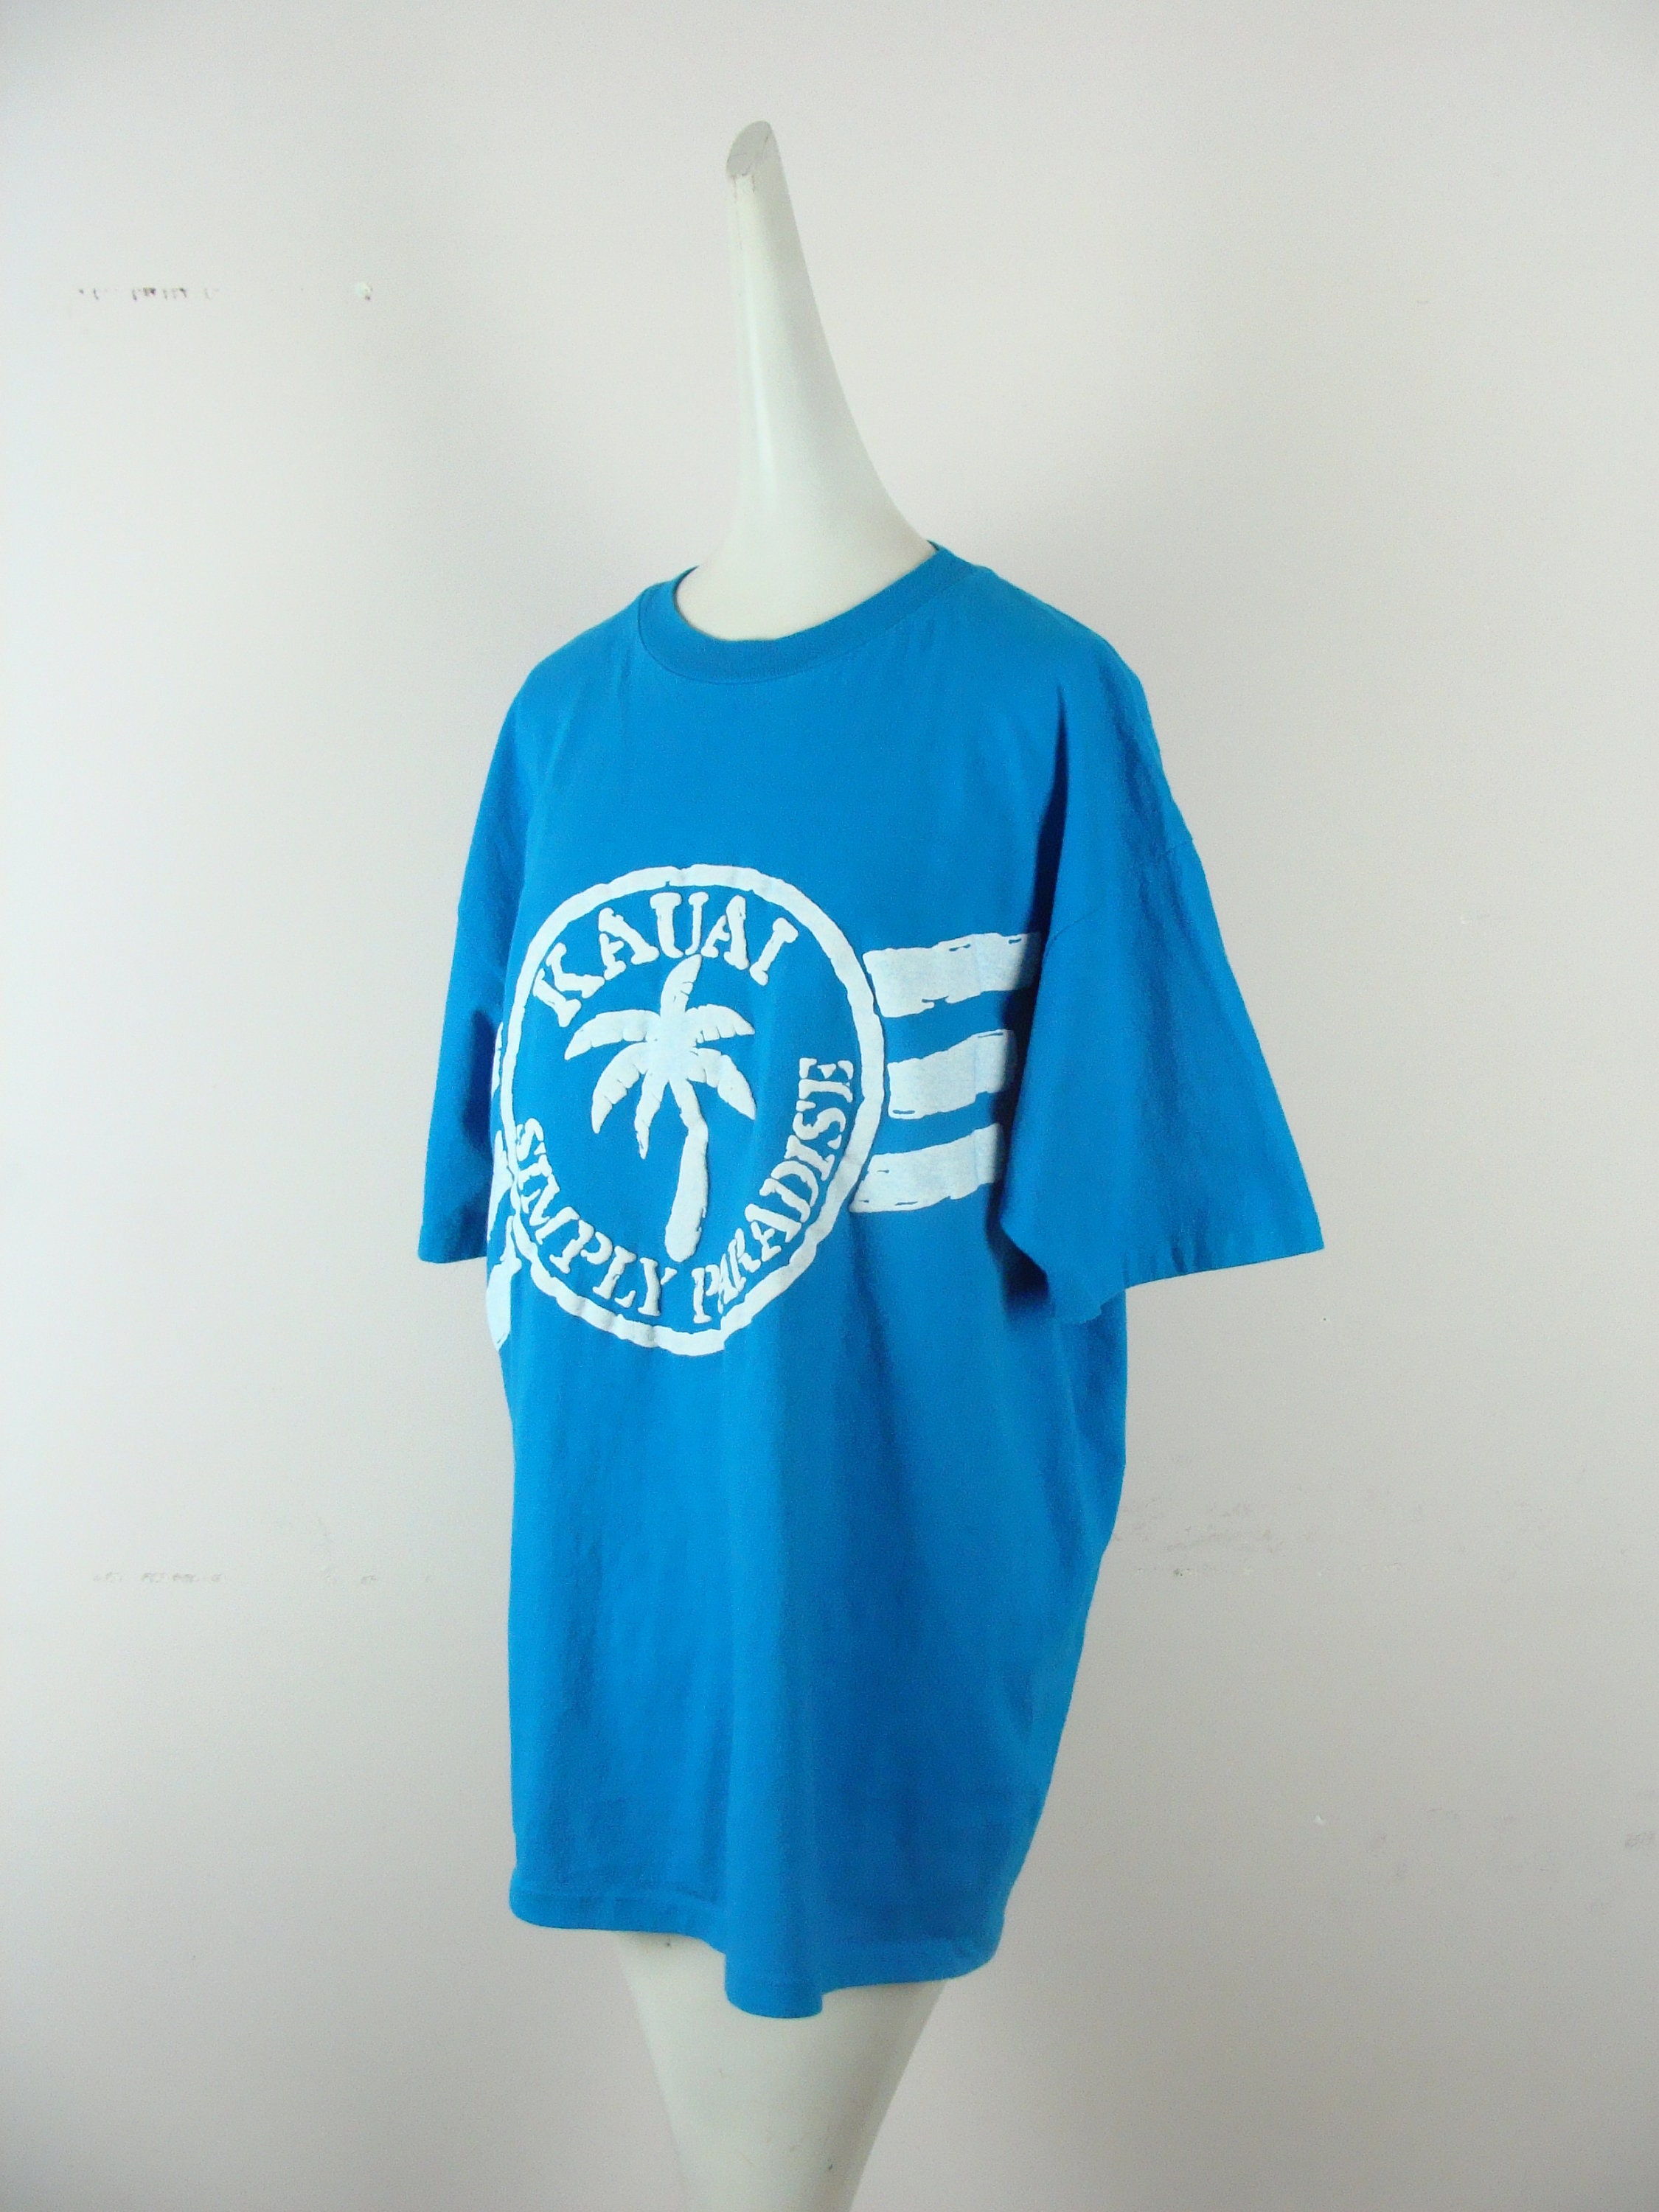 Vintage T-Shirt 90s Kauai Hawaii Souvenir Tee Single Stitch | Etsy